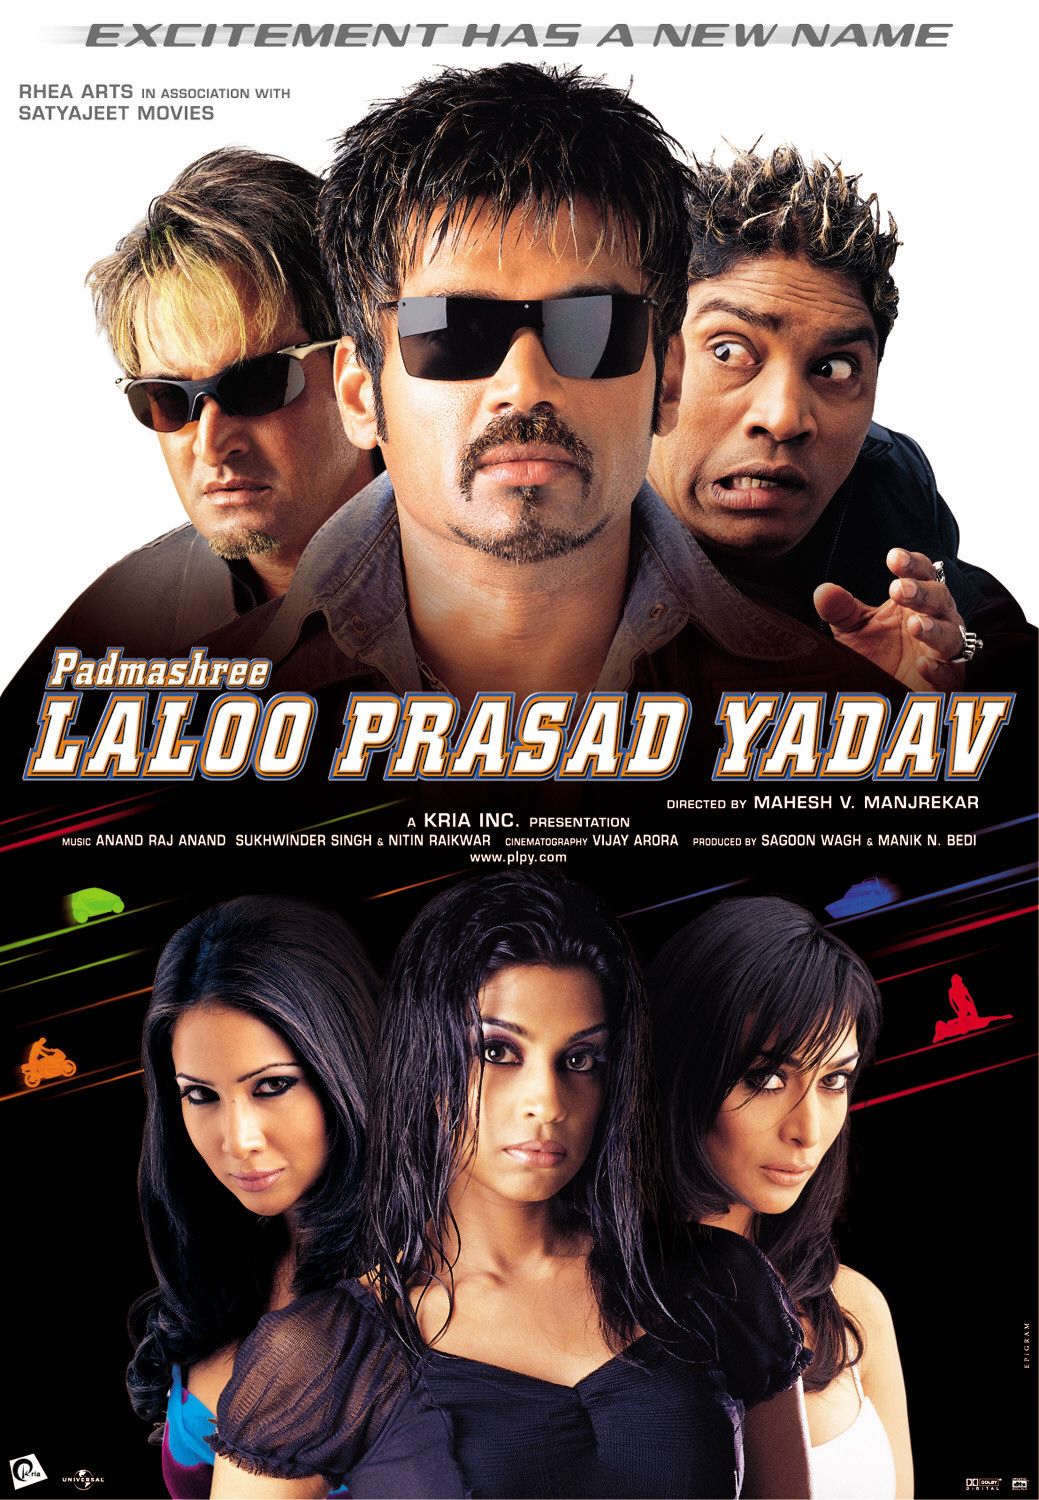 Extra Large Movie Poster Image for Padmashree Laloo Prasad Yadav (#5 of 6)